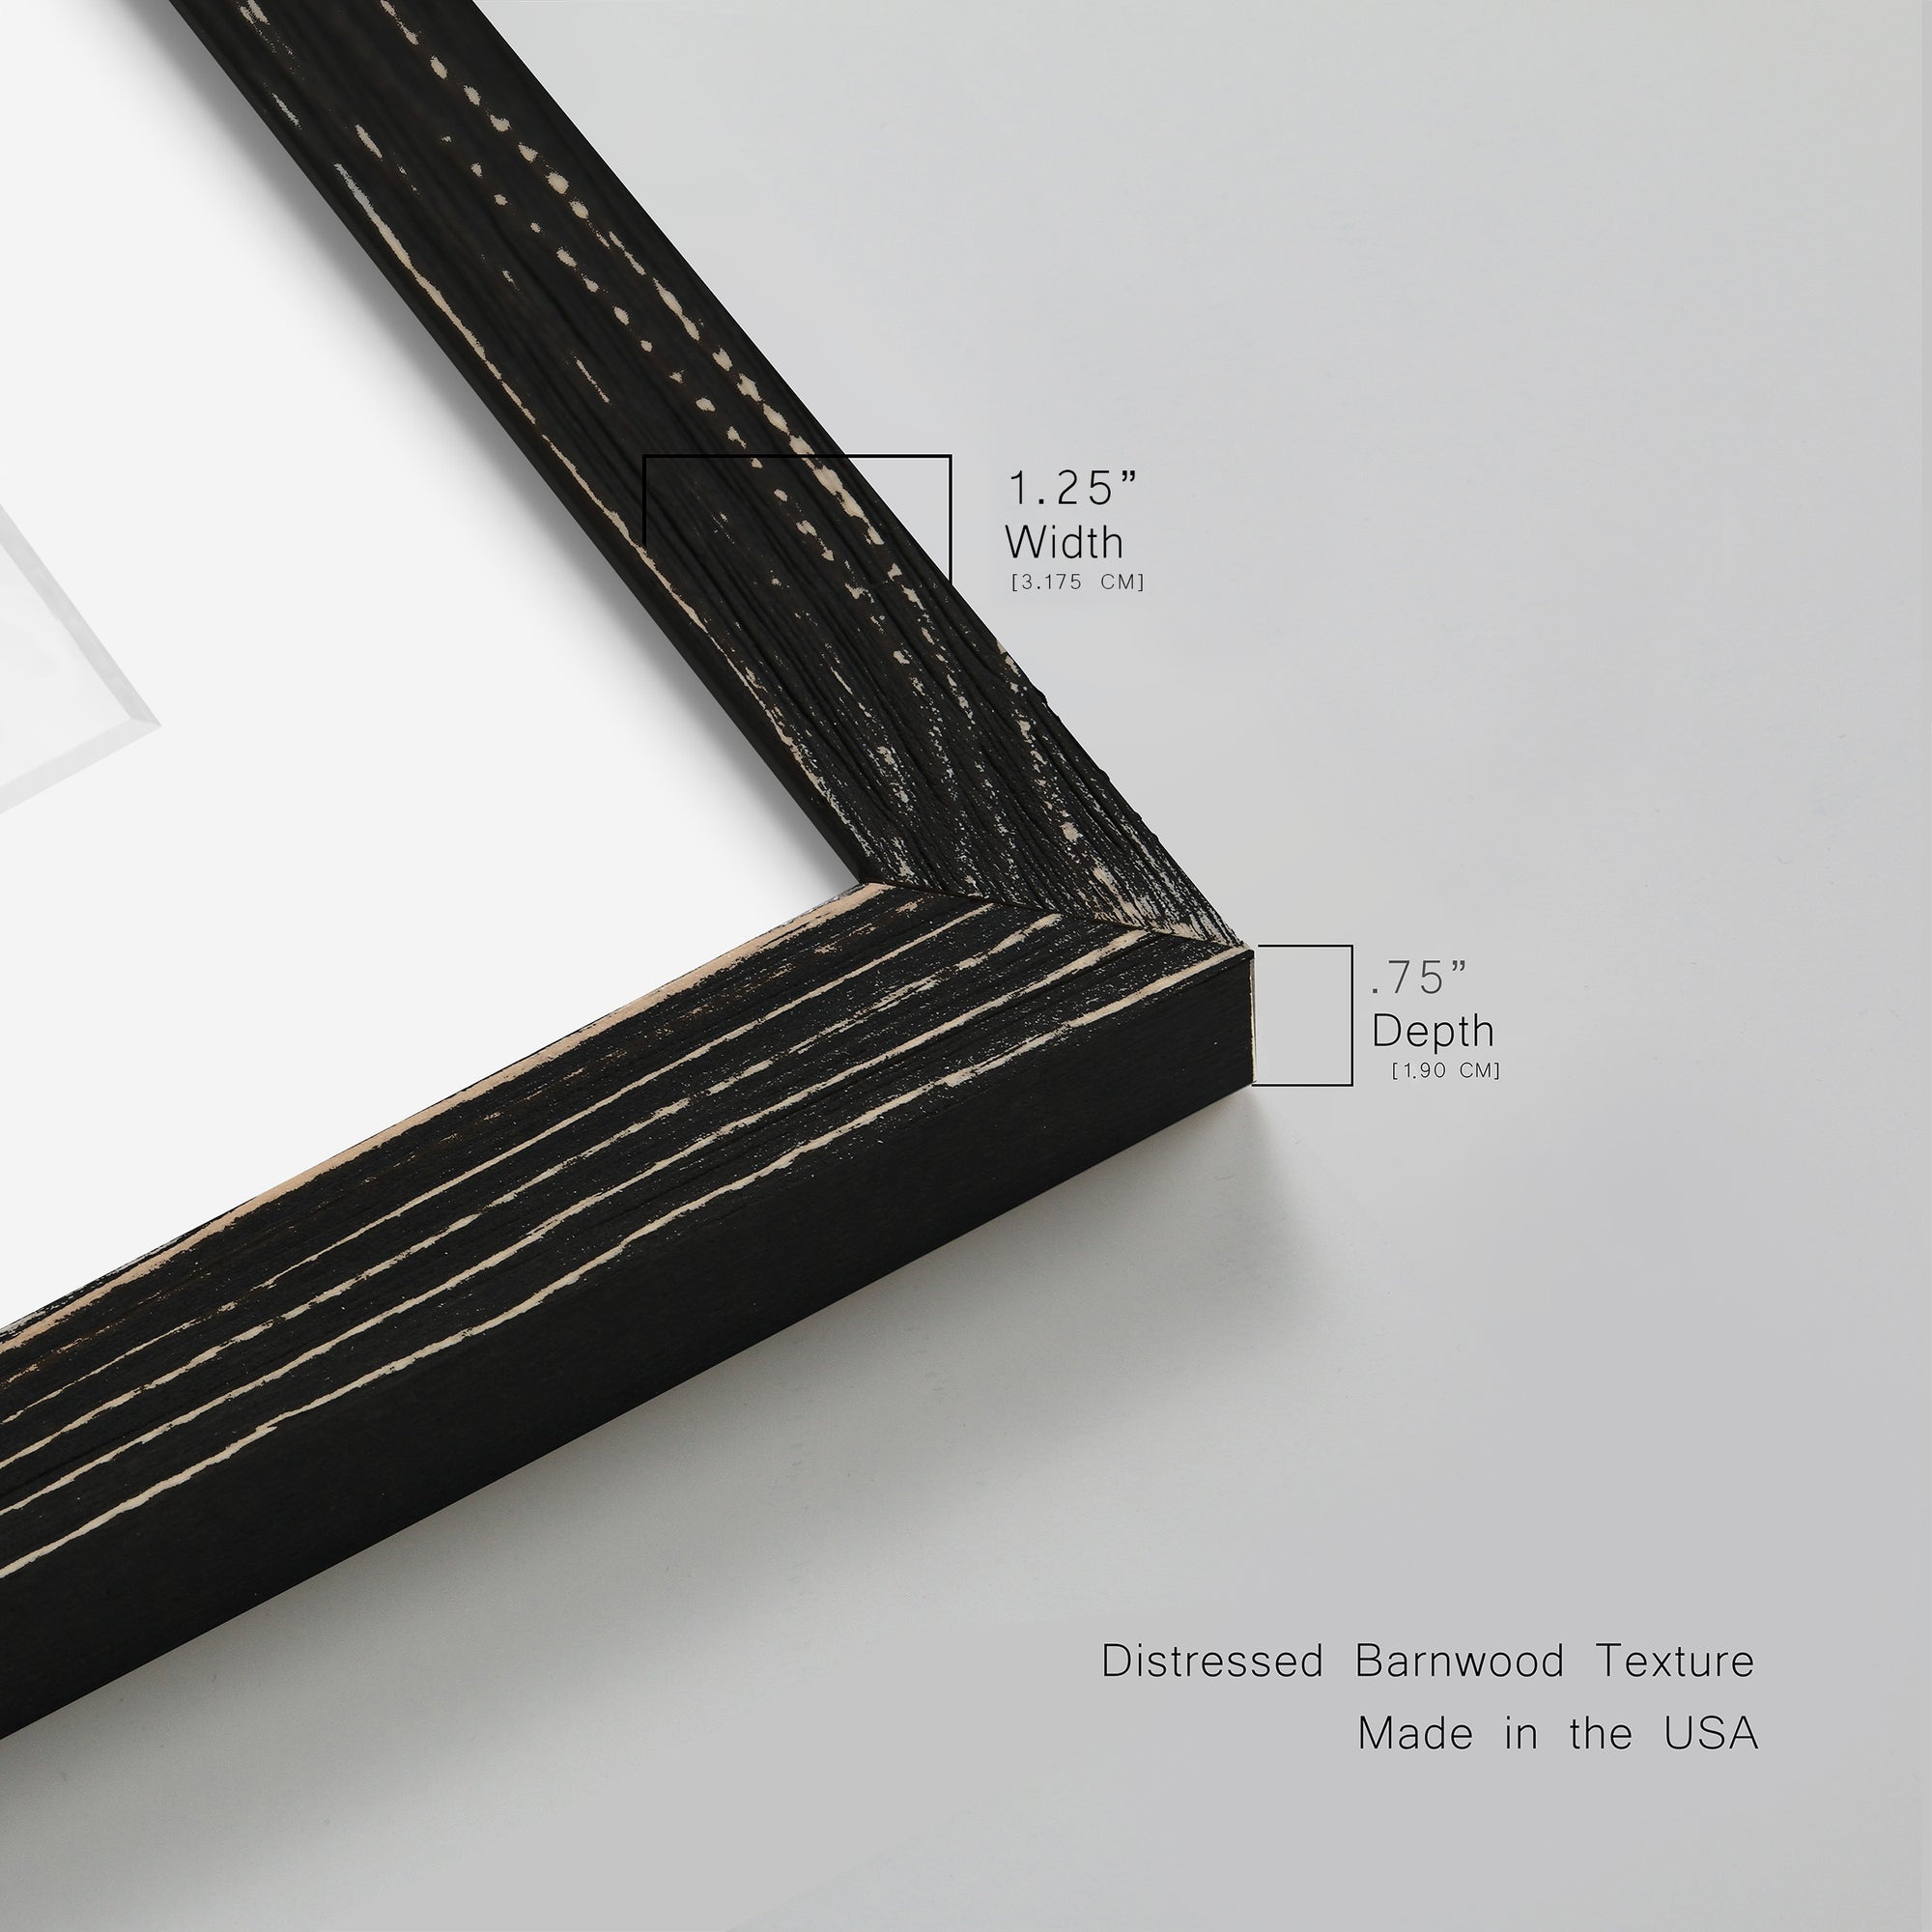 Rose Contour - Premium Framed Print - Distressed Barnwood Frame - Ready to Hang